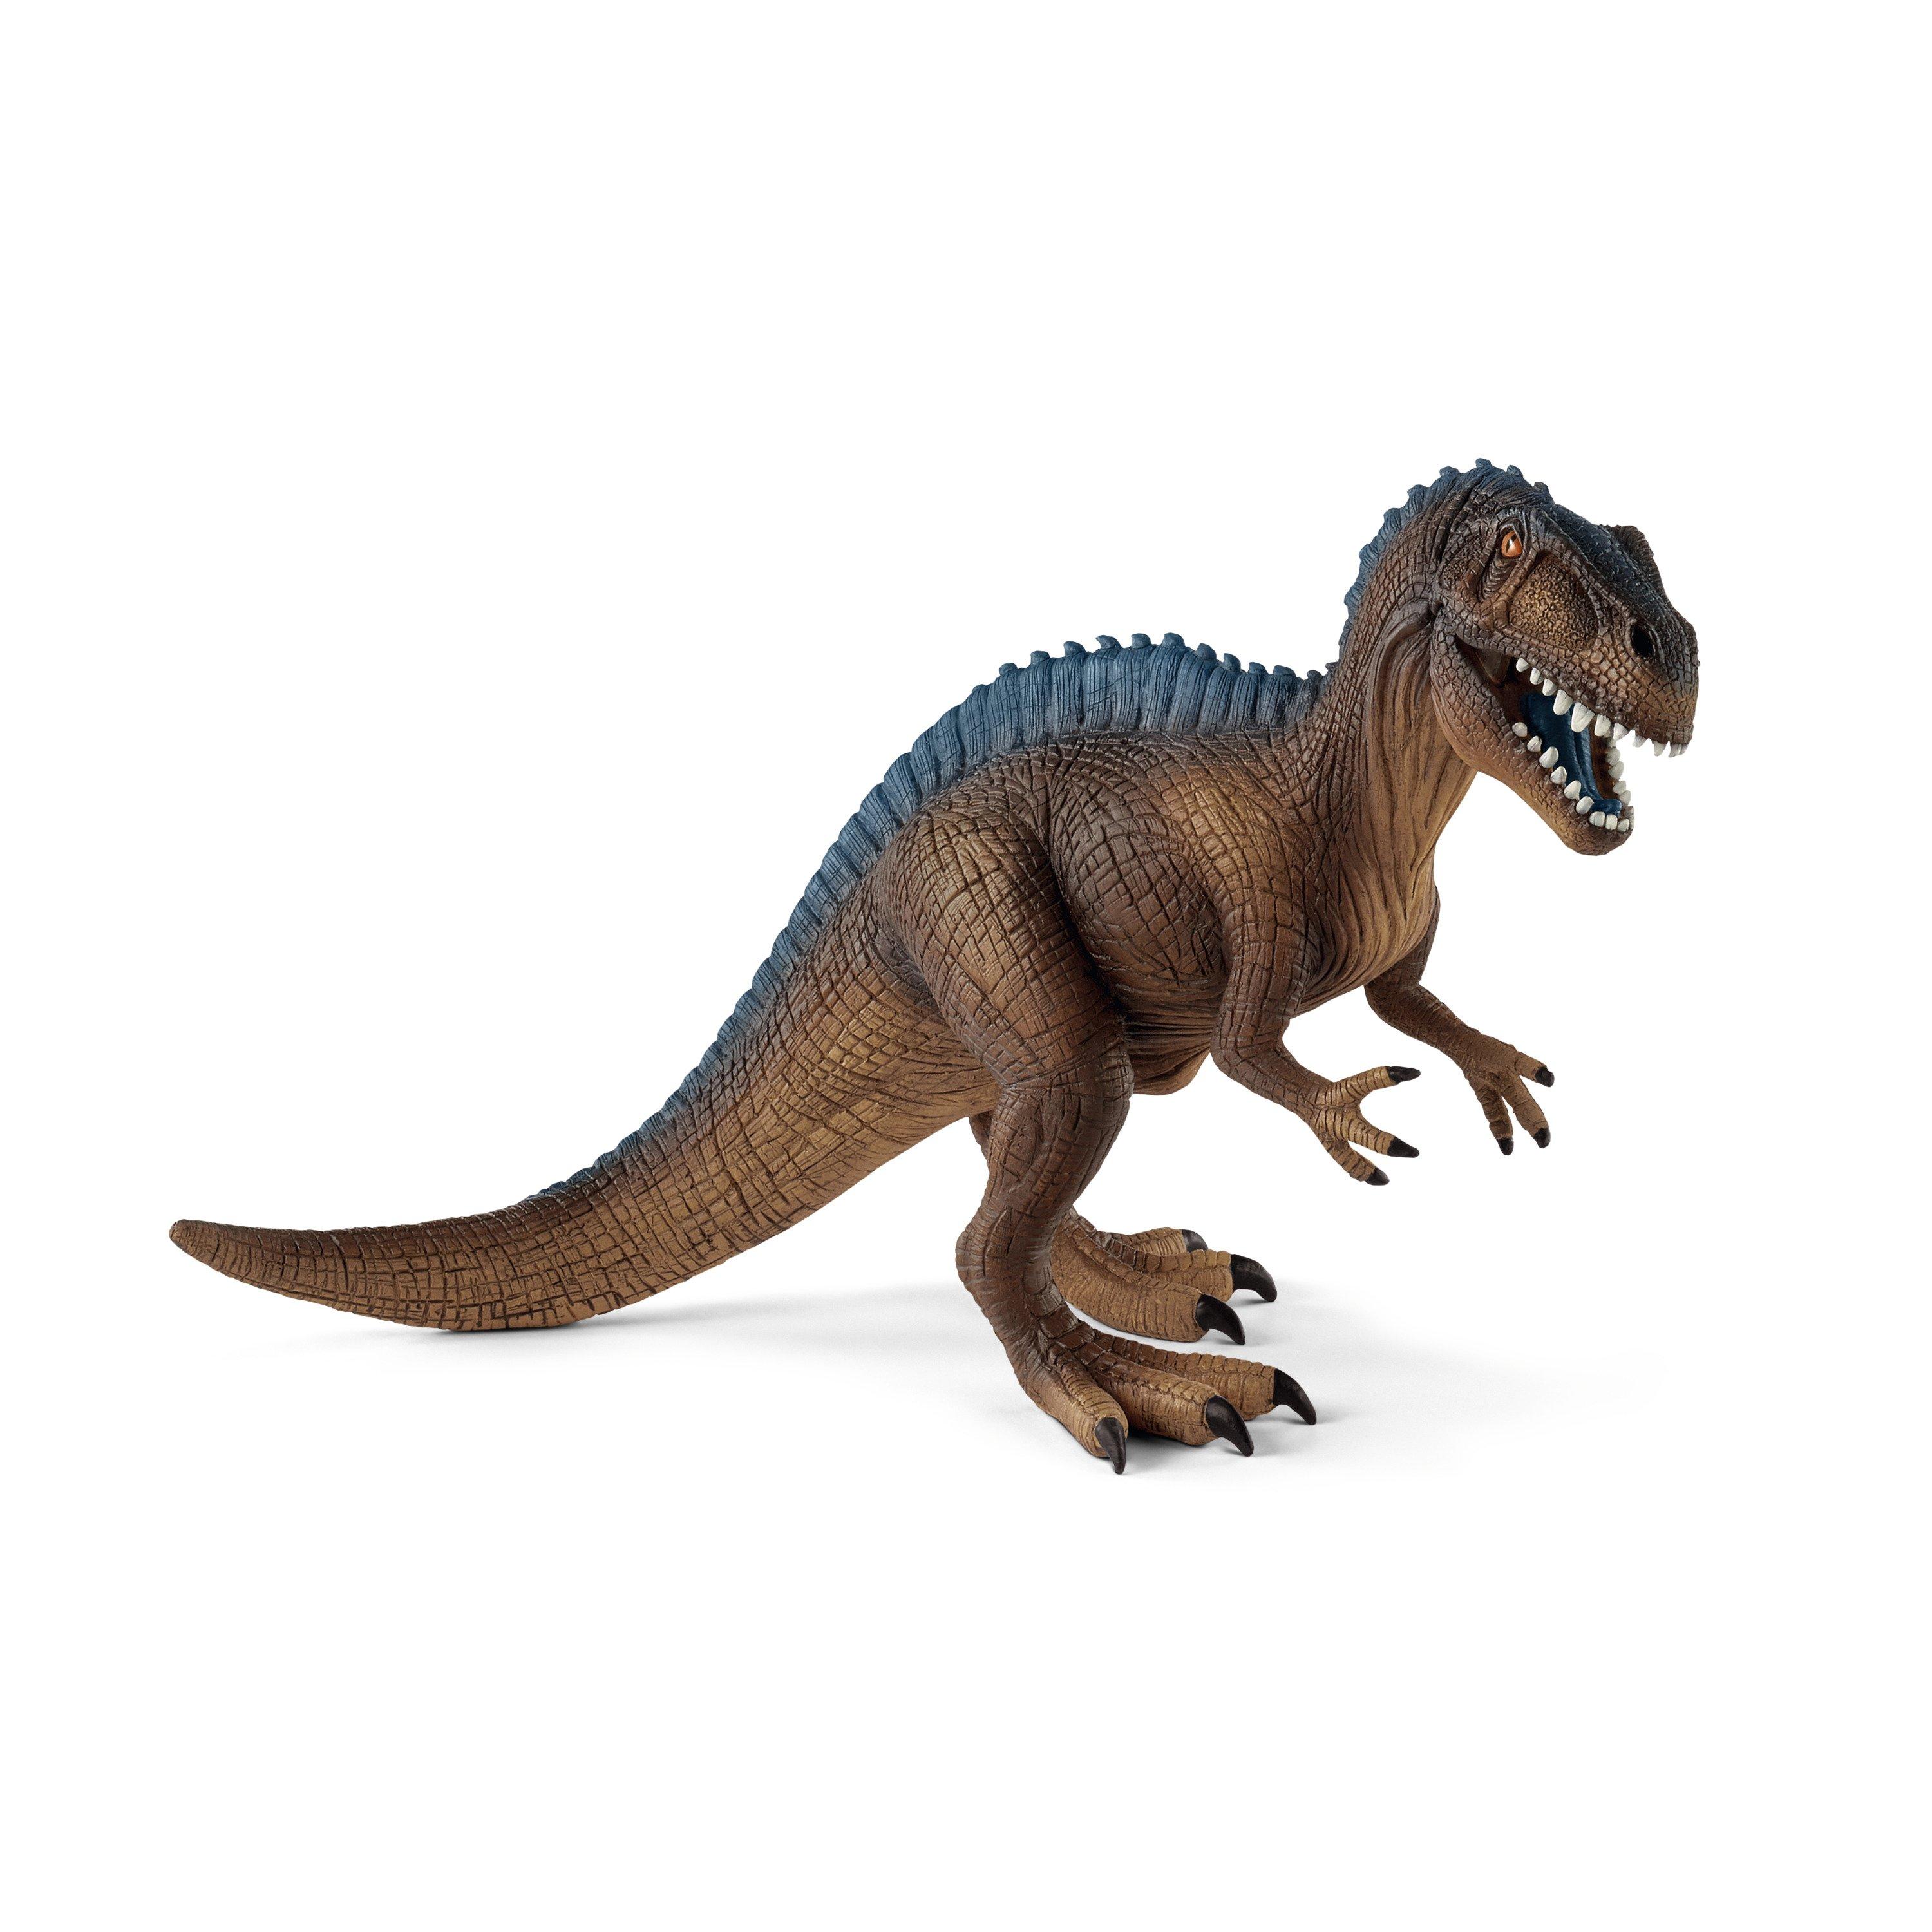 Image of Schleich 14584 Acrocanthosaurus